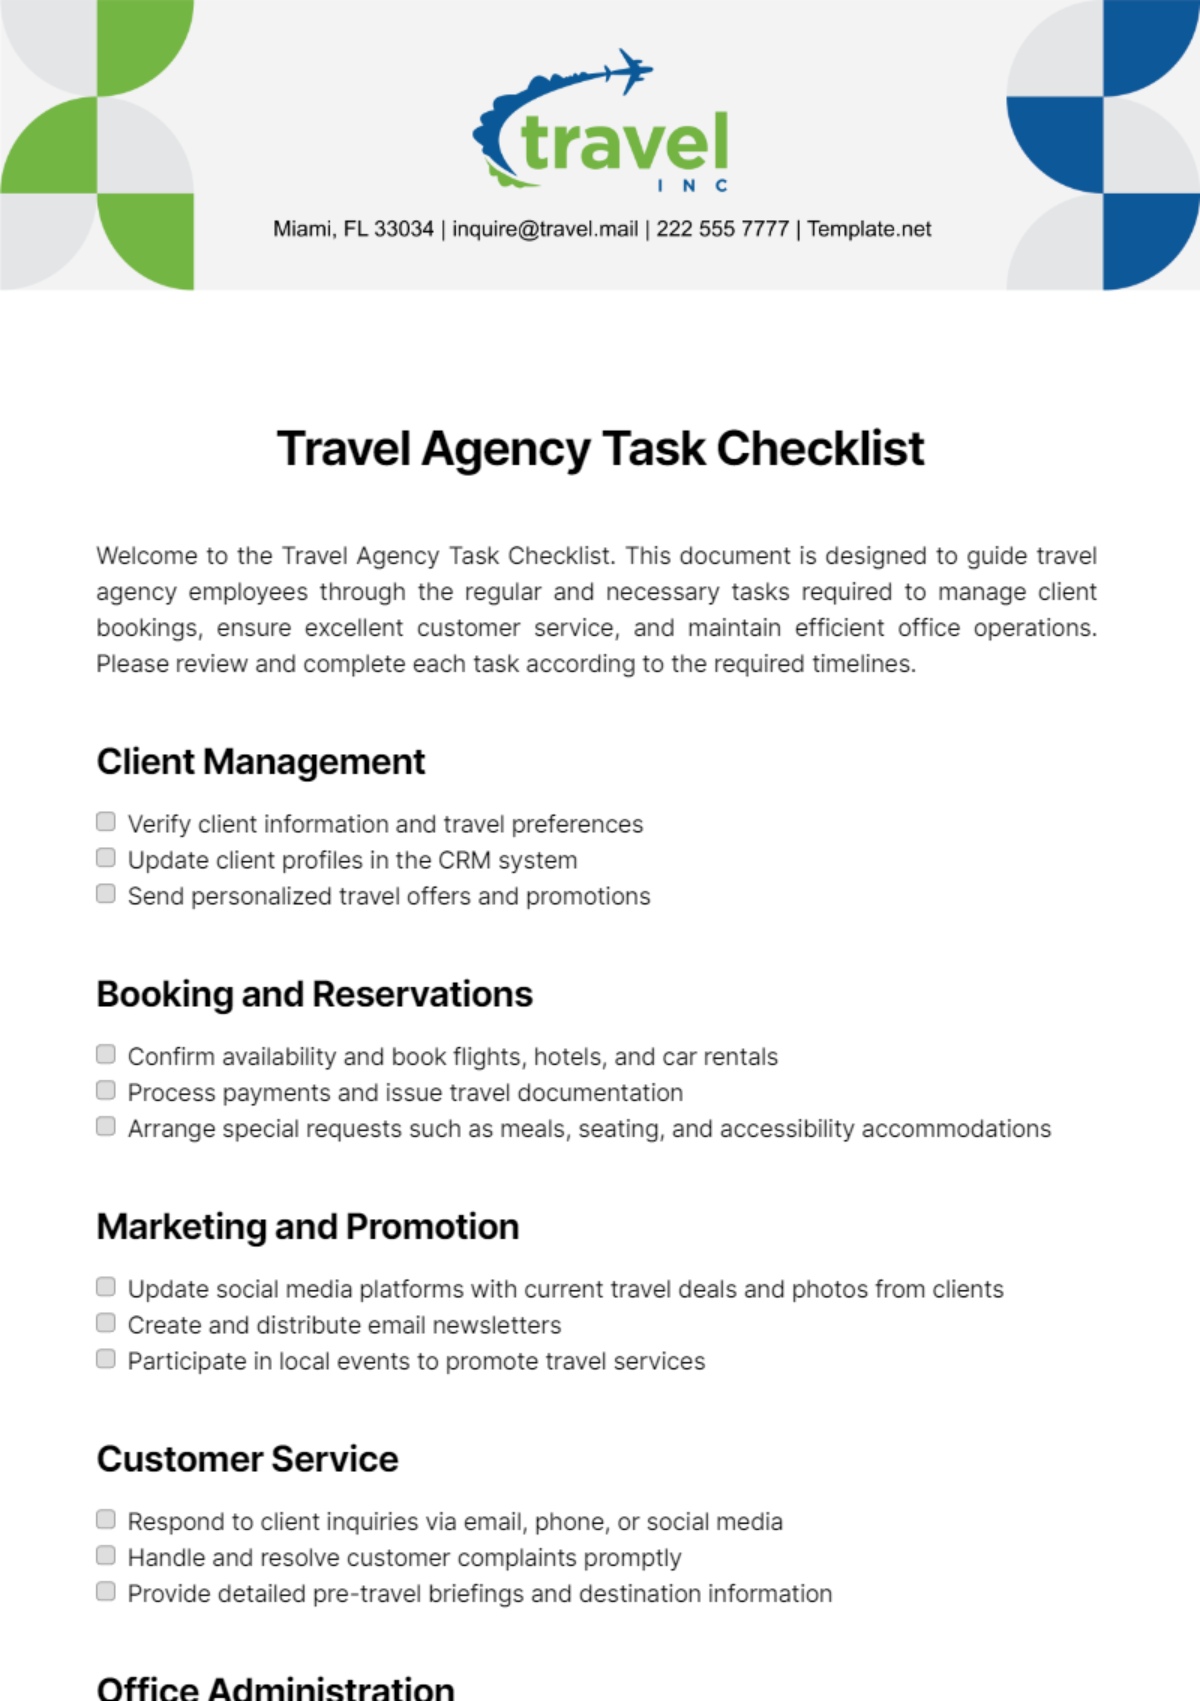 Travel Agency Task Checklist Template